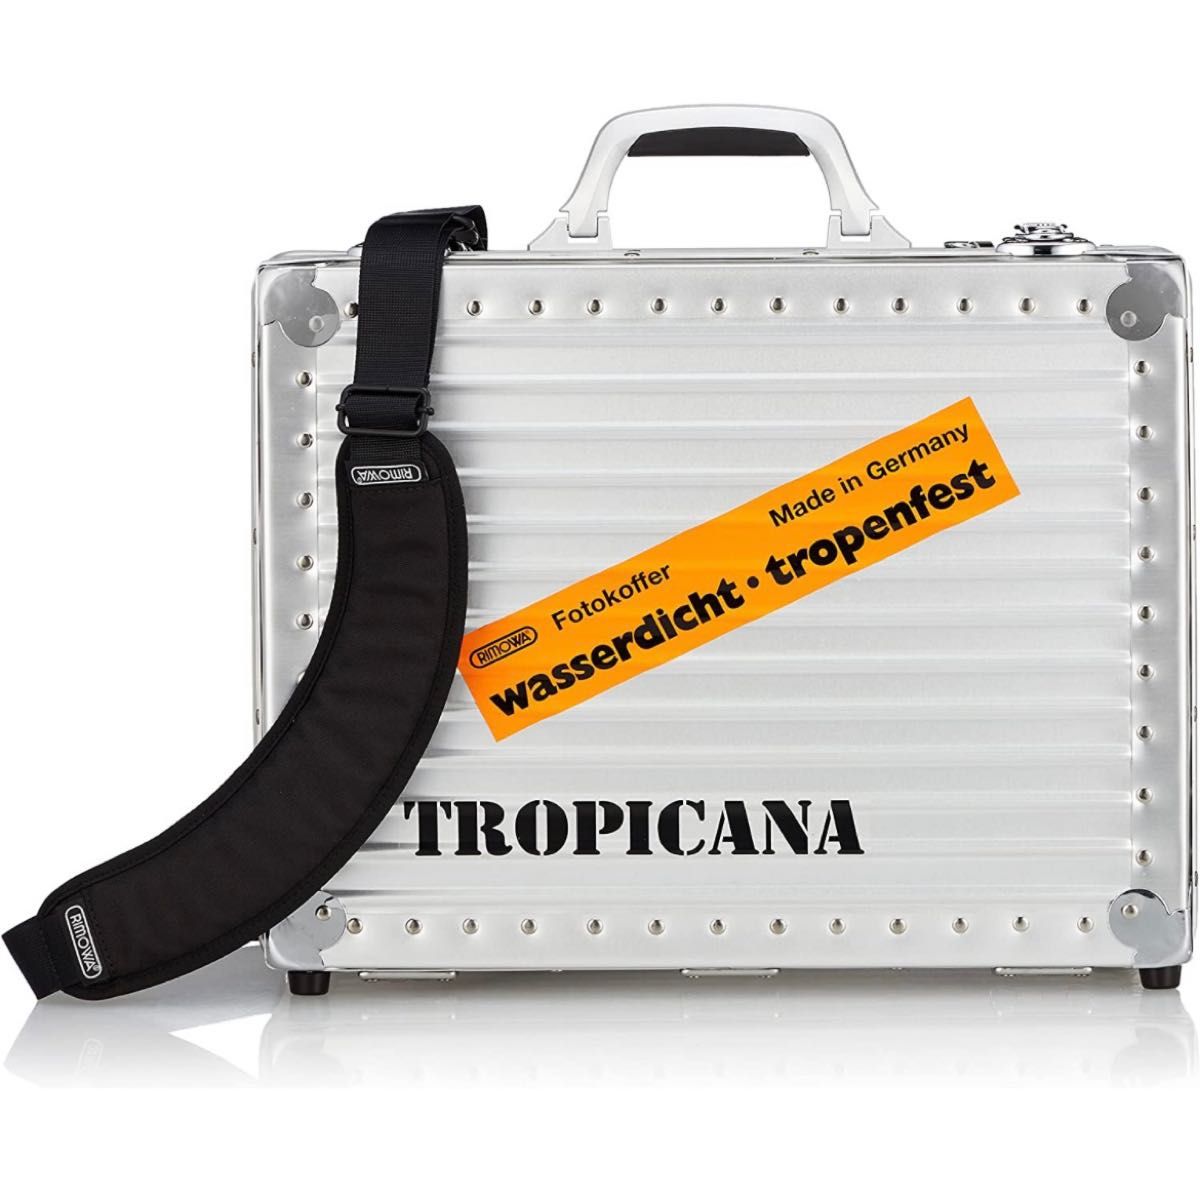 RIMOWA スーツケース tropicana ハンドケース 機内持ち込み 旅行用品